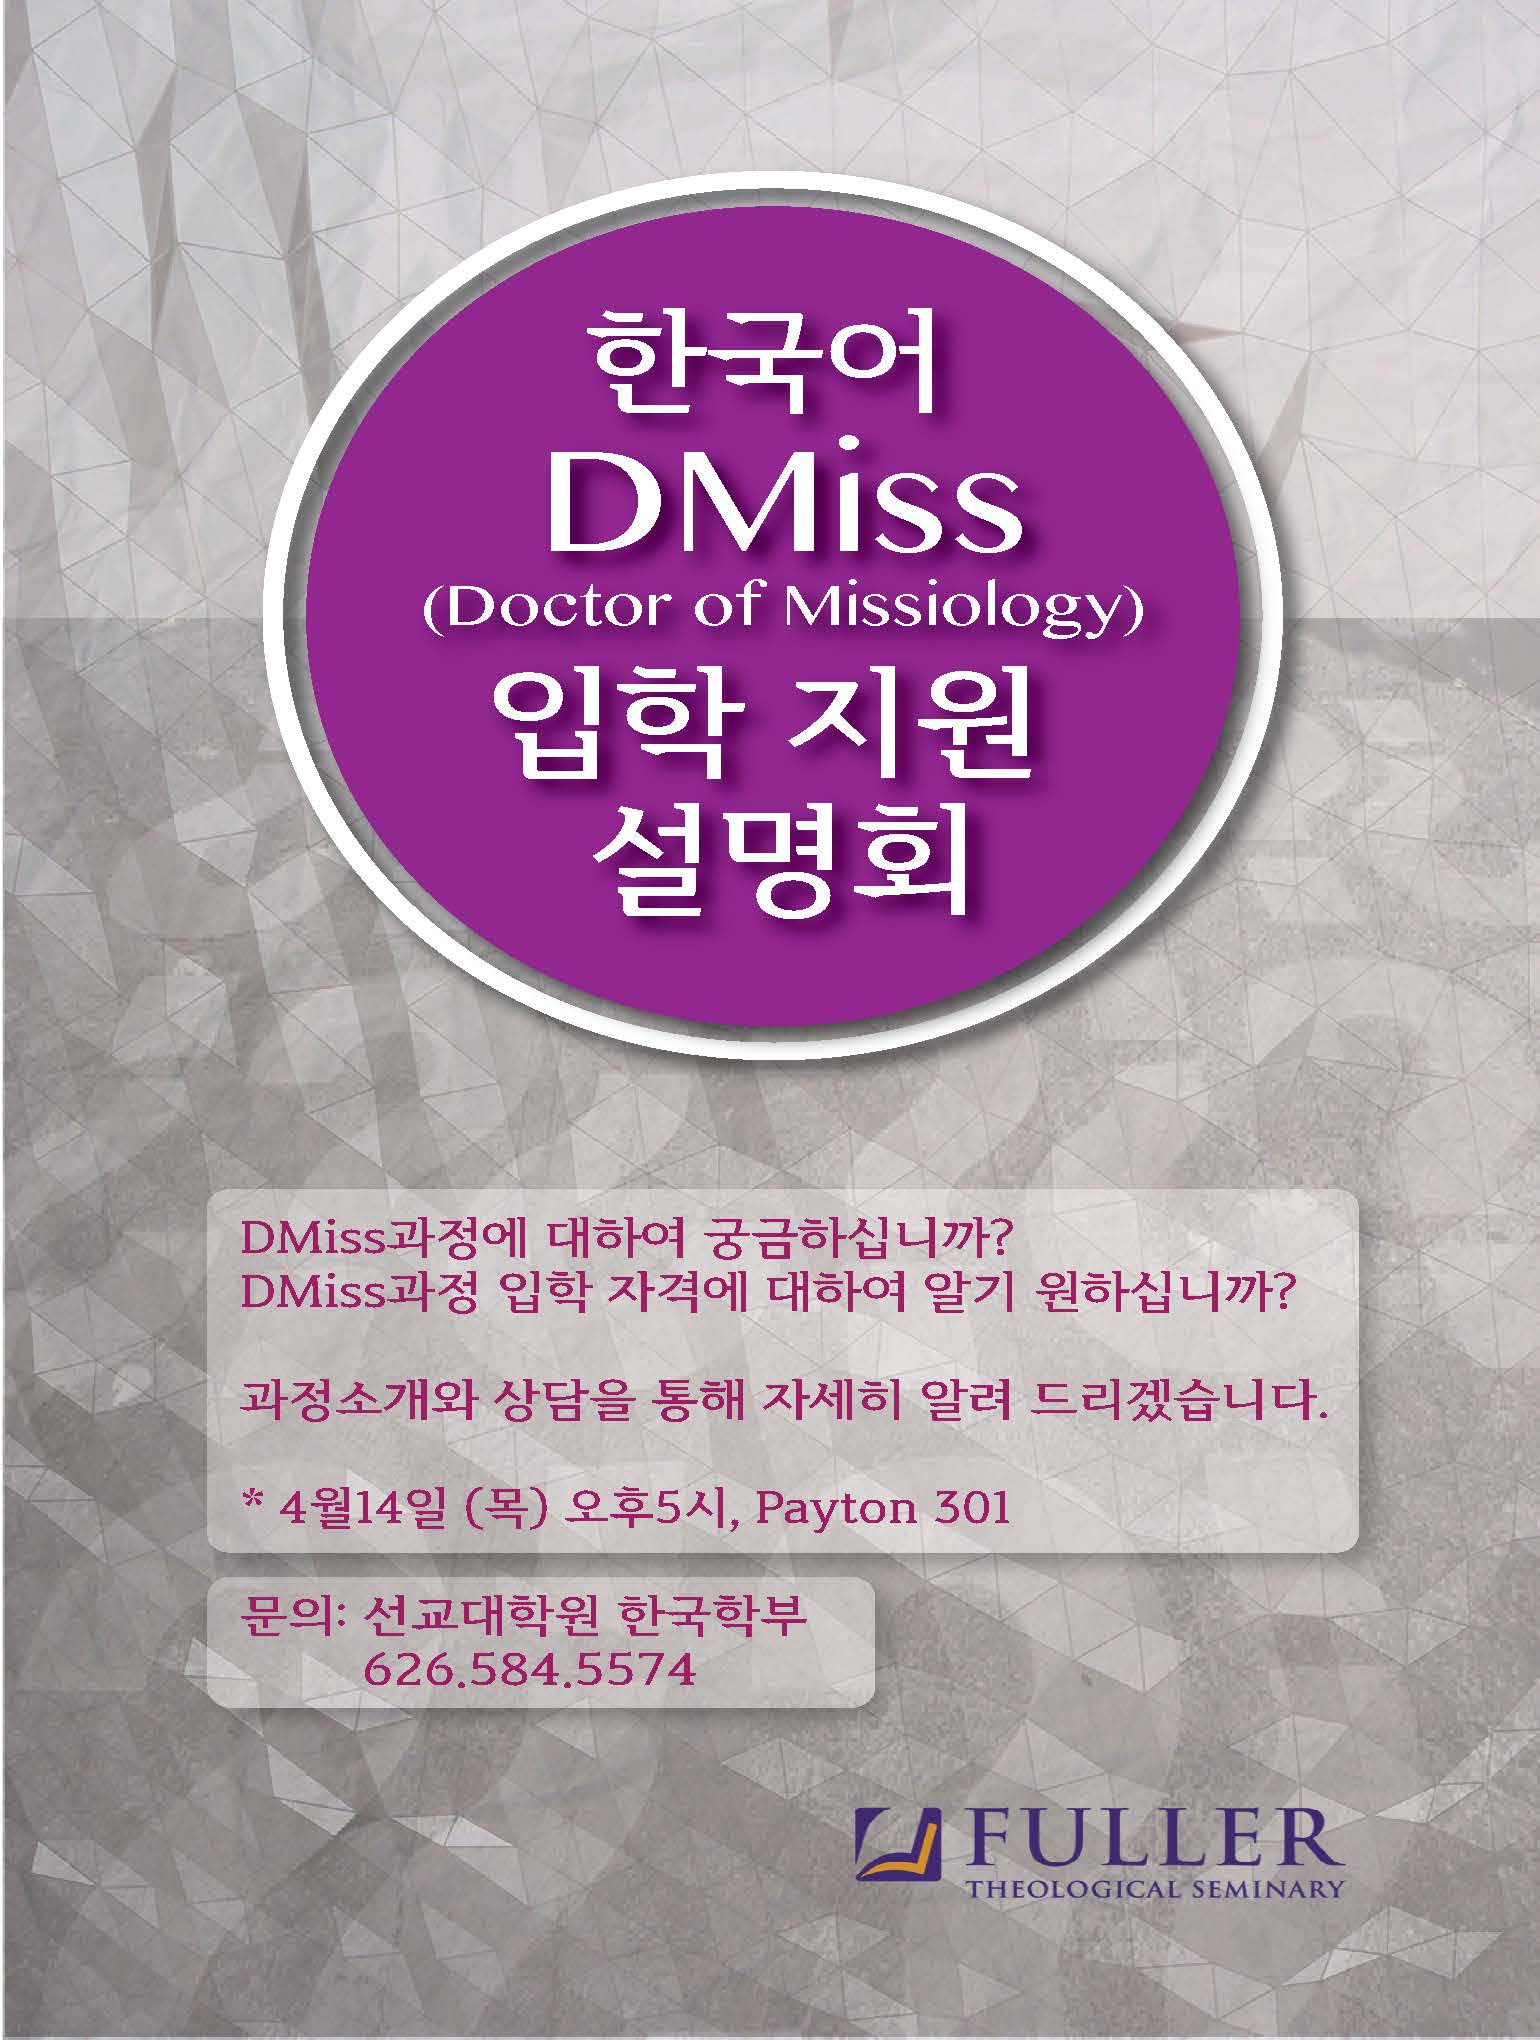 DMiss Info Meeting6.jpg